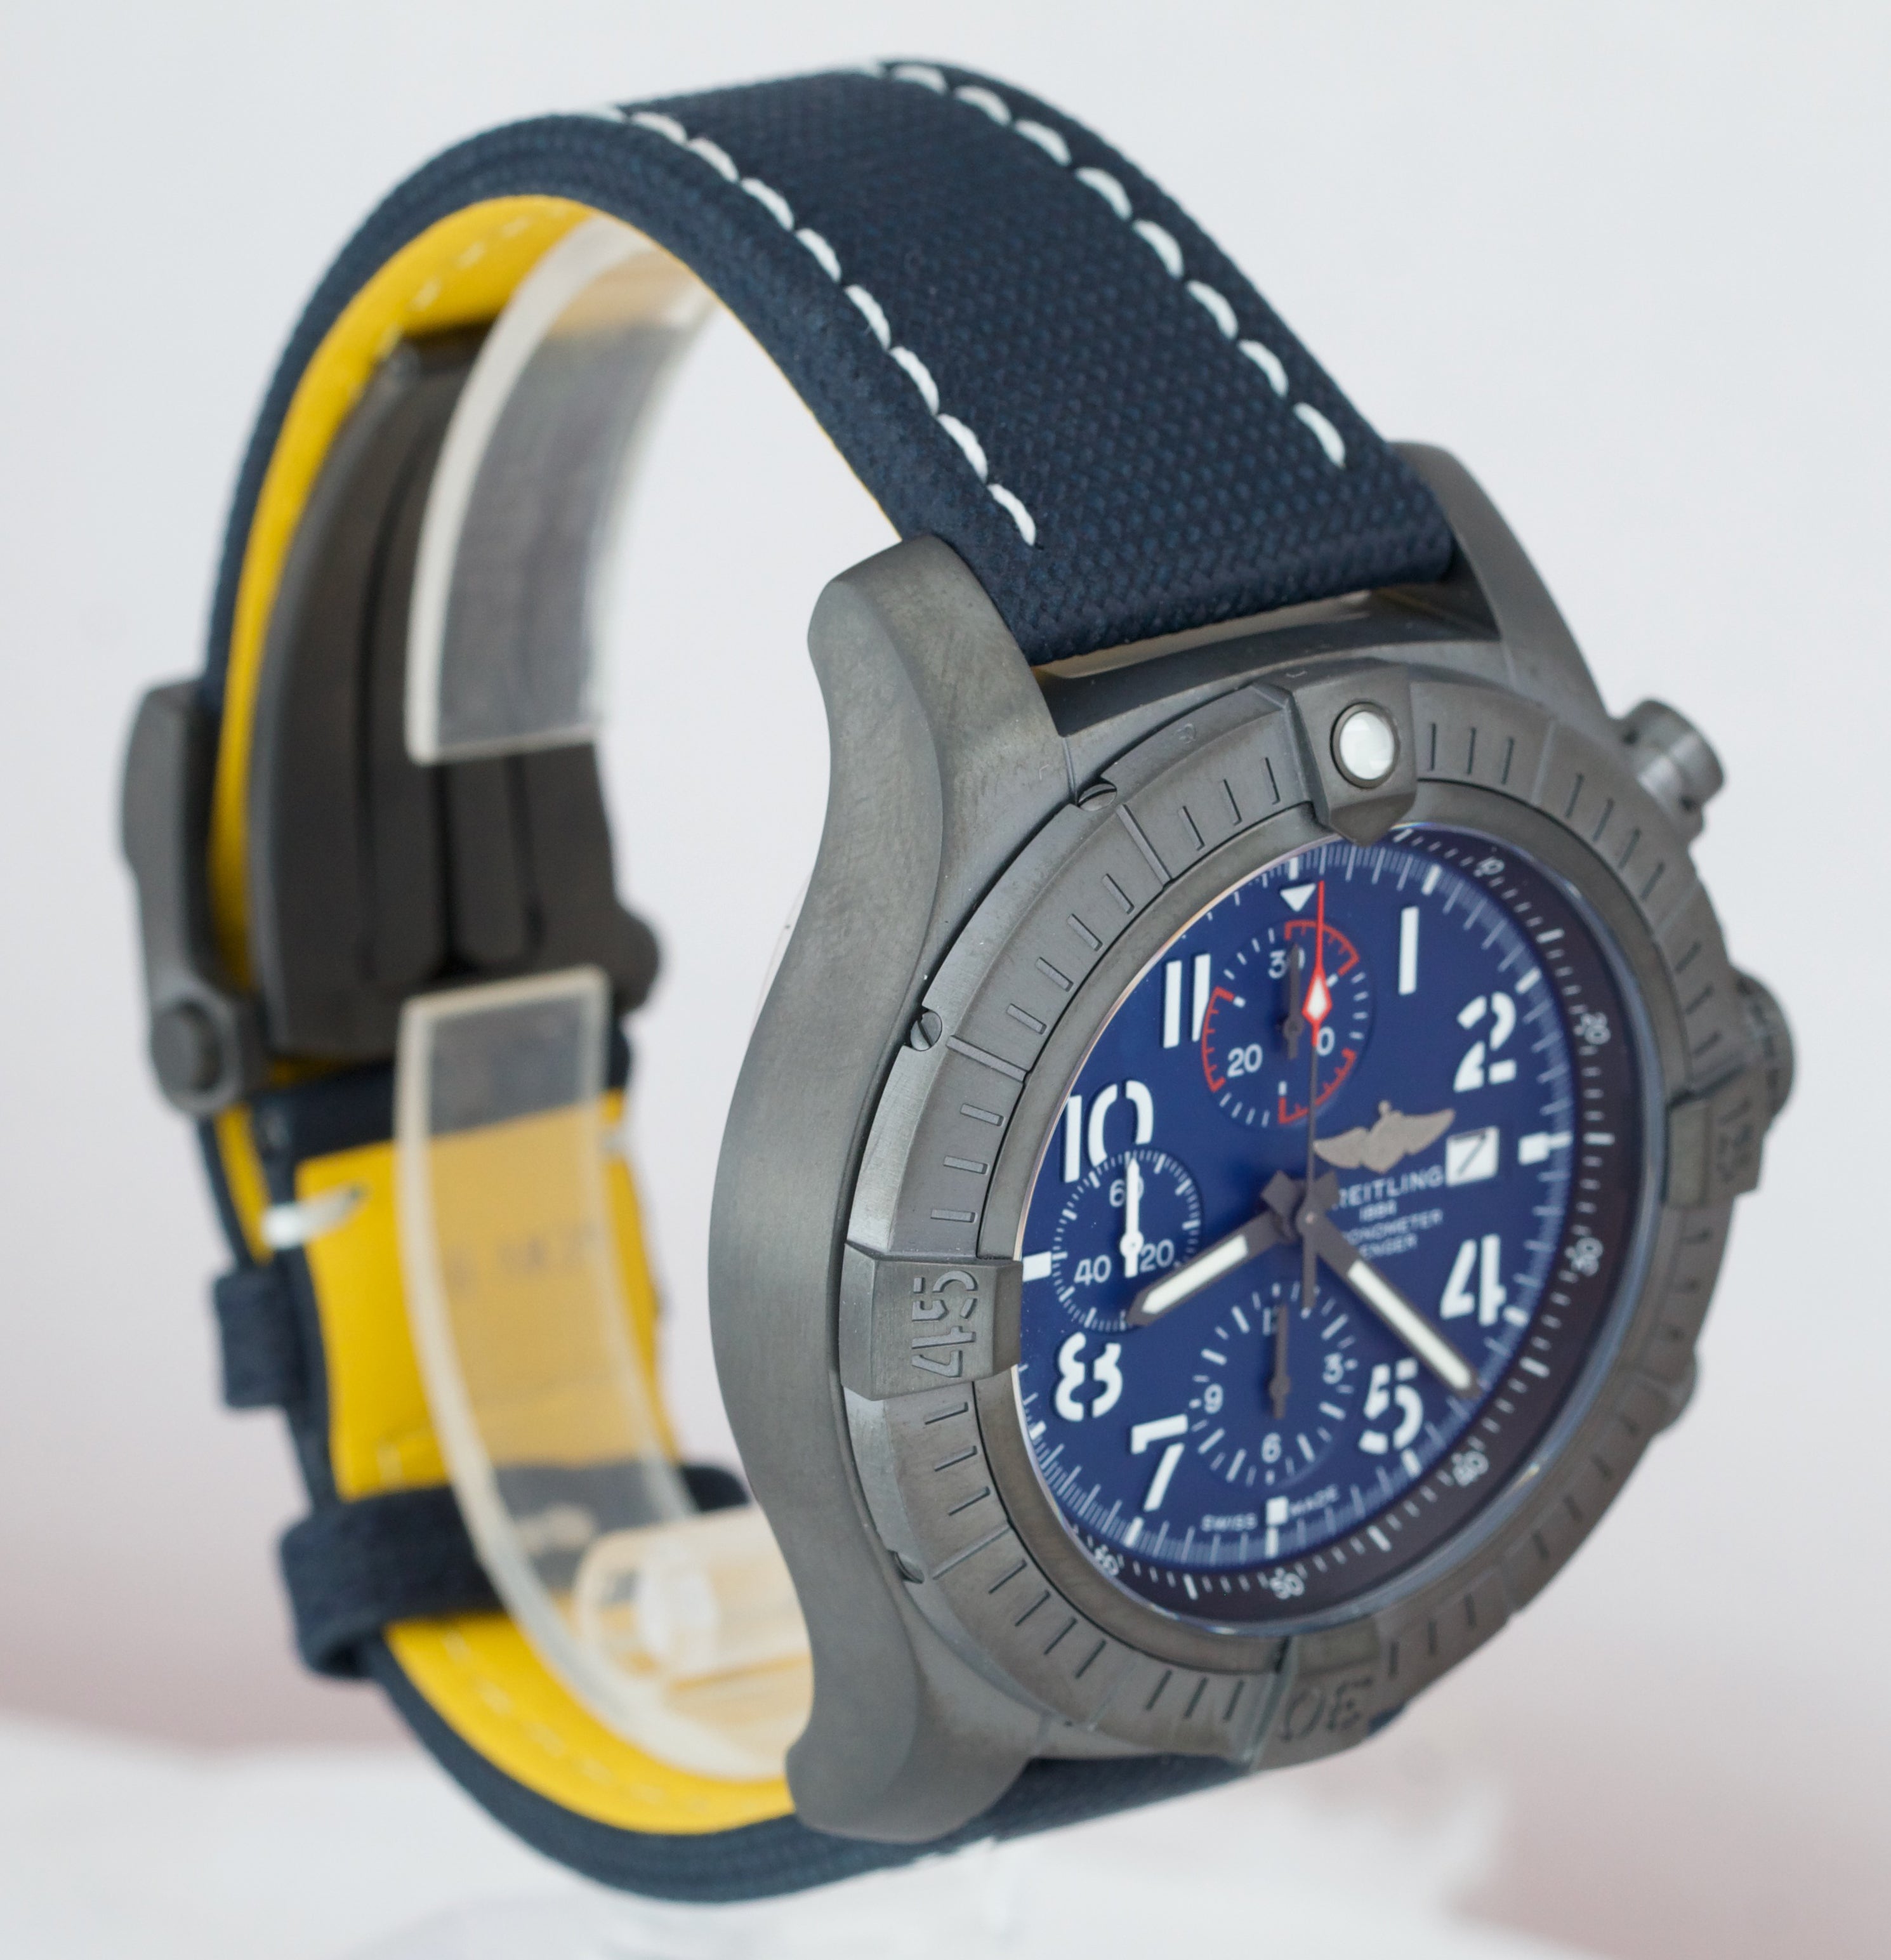 BRAND NEW Breitling Super Avenger Chronograph 48 Night Mission V13375 DLC Watch